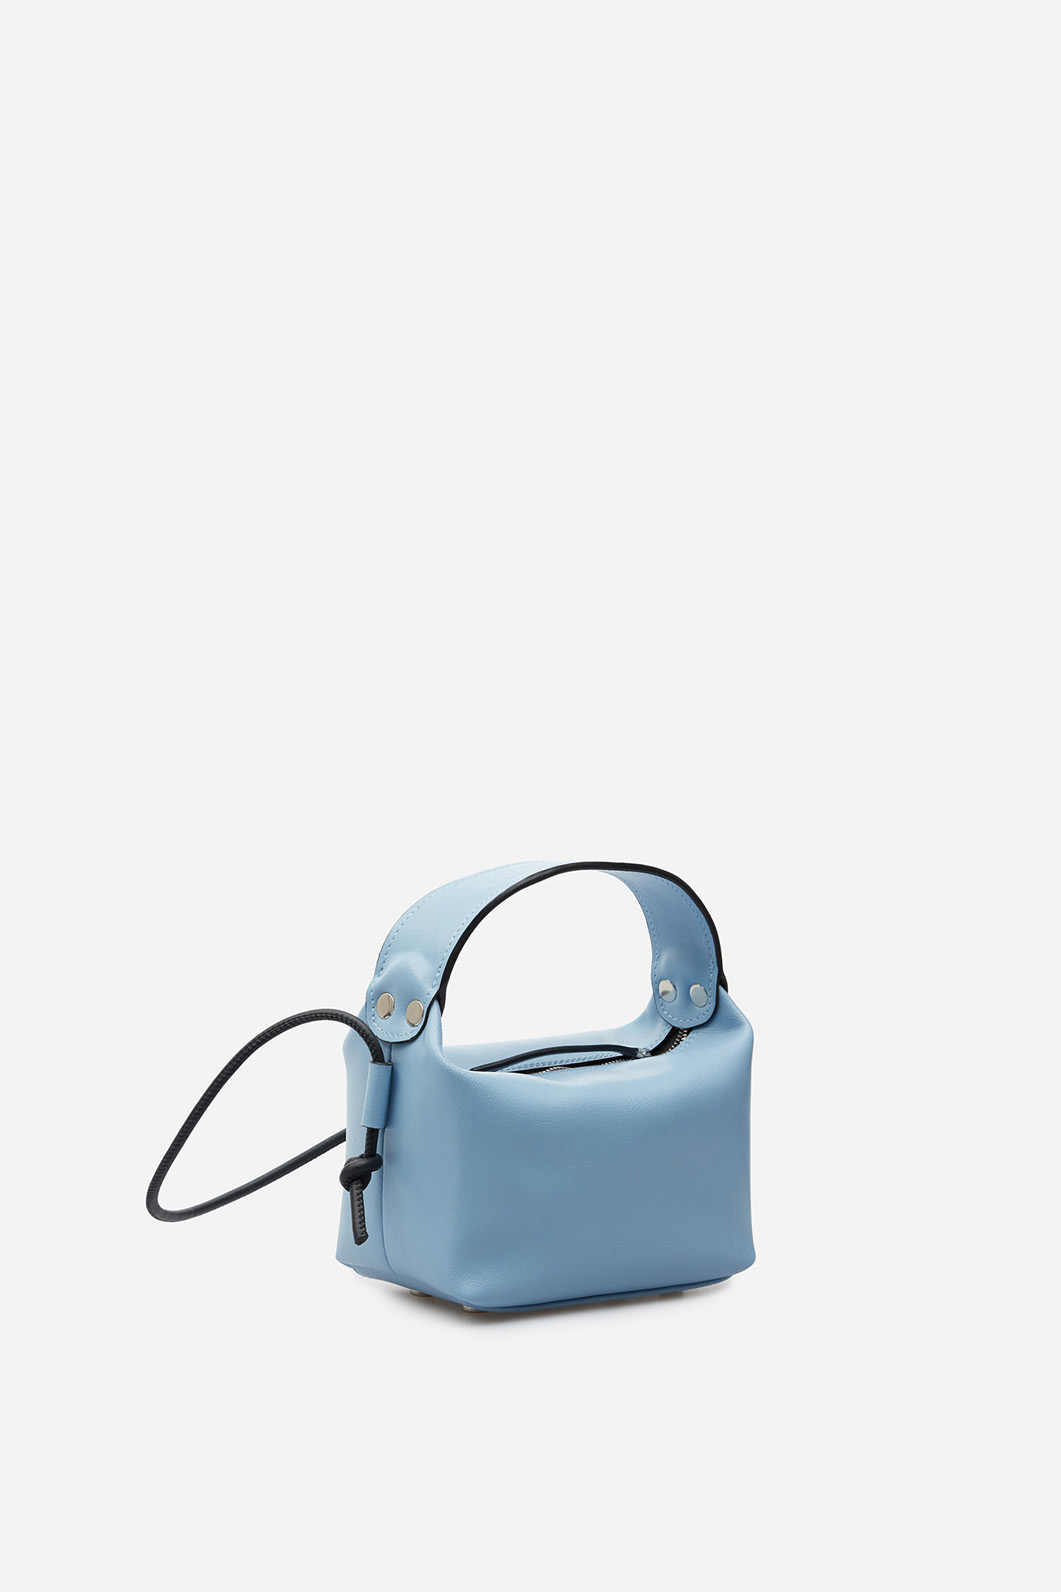 Selma micro blue leather
bag /silver/